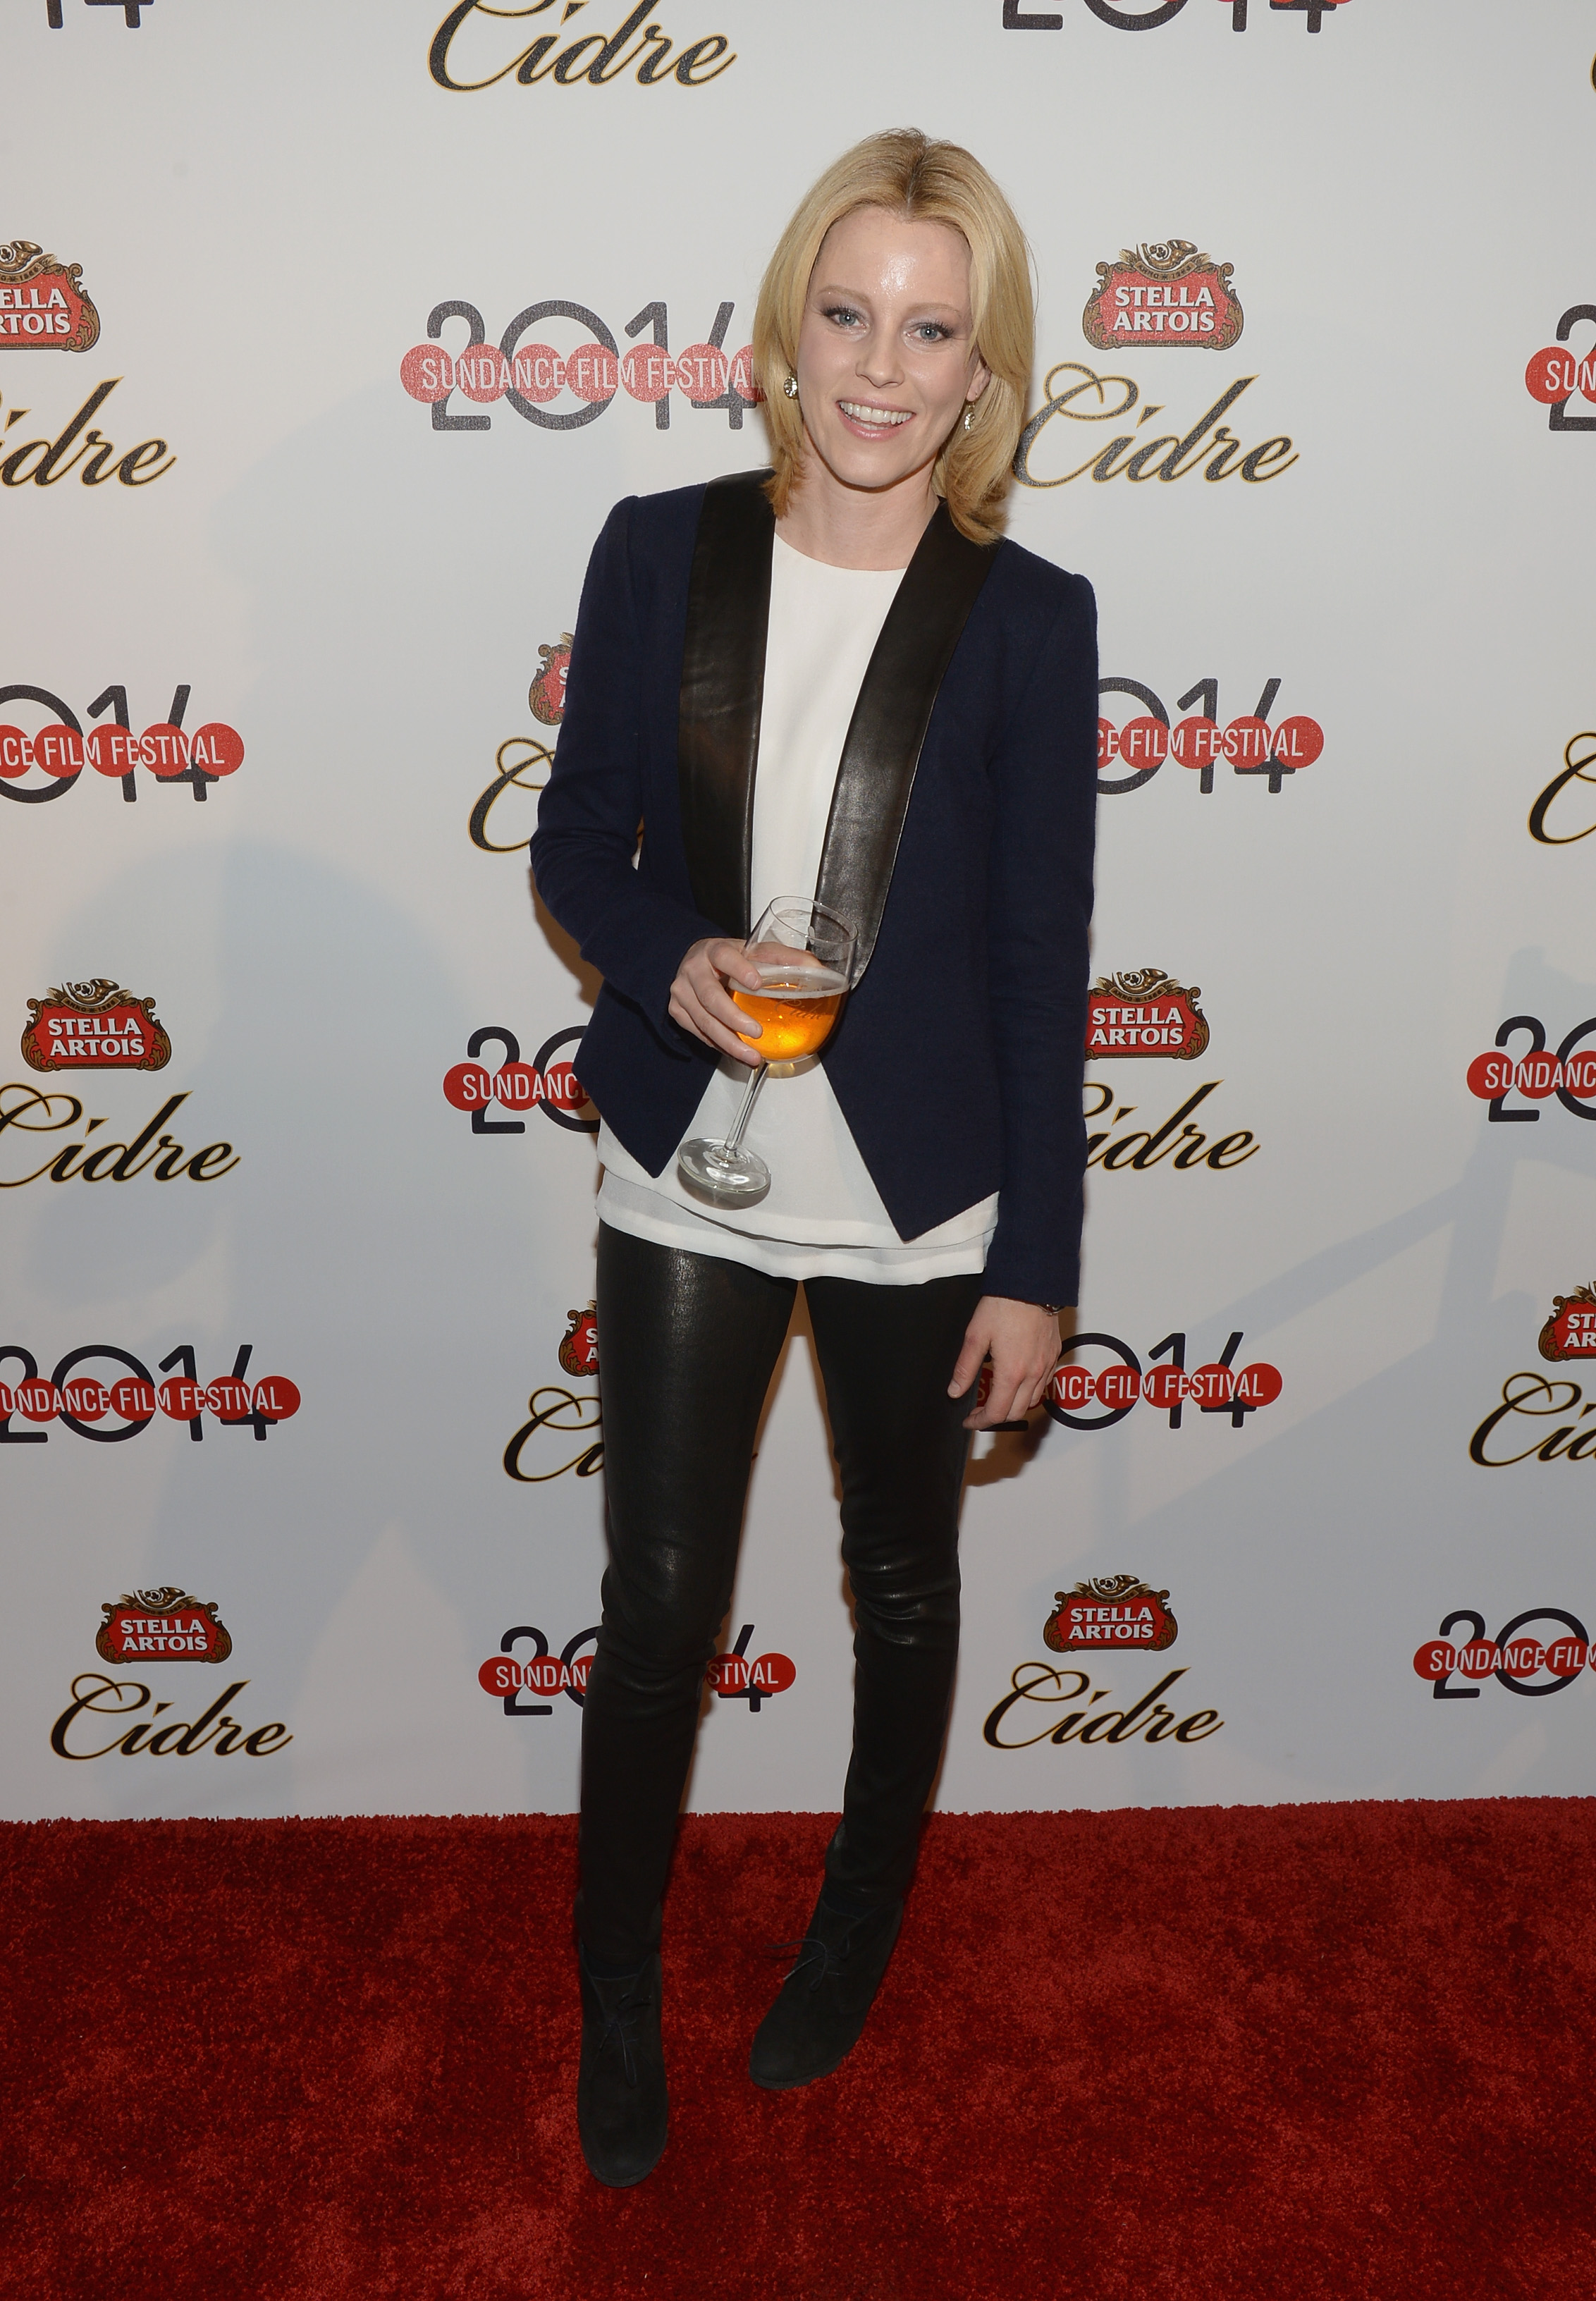 Elizabeth Banks - Stella Artois Cidre National Launch Party at the Sundance Film Festival - Day 1 - 2014 Park City